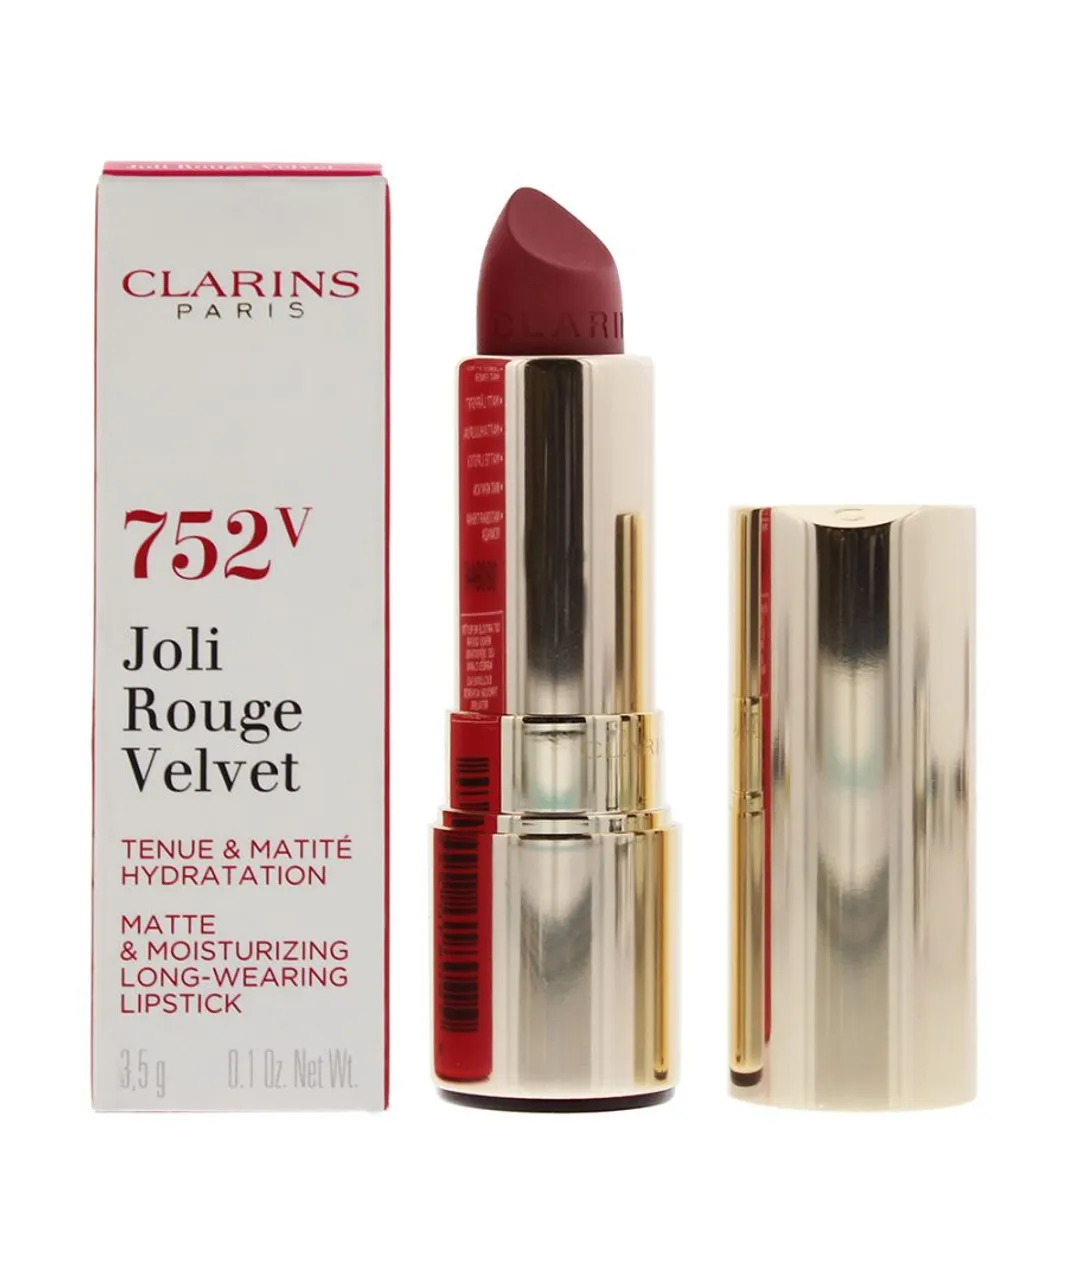 Clarins Womens Joli Rouge Velvet Matte & Moisturizing Lipstick 3.5g - 752V Rosewood - NA - One Size